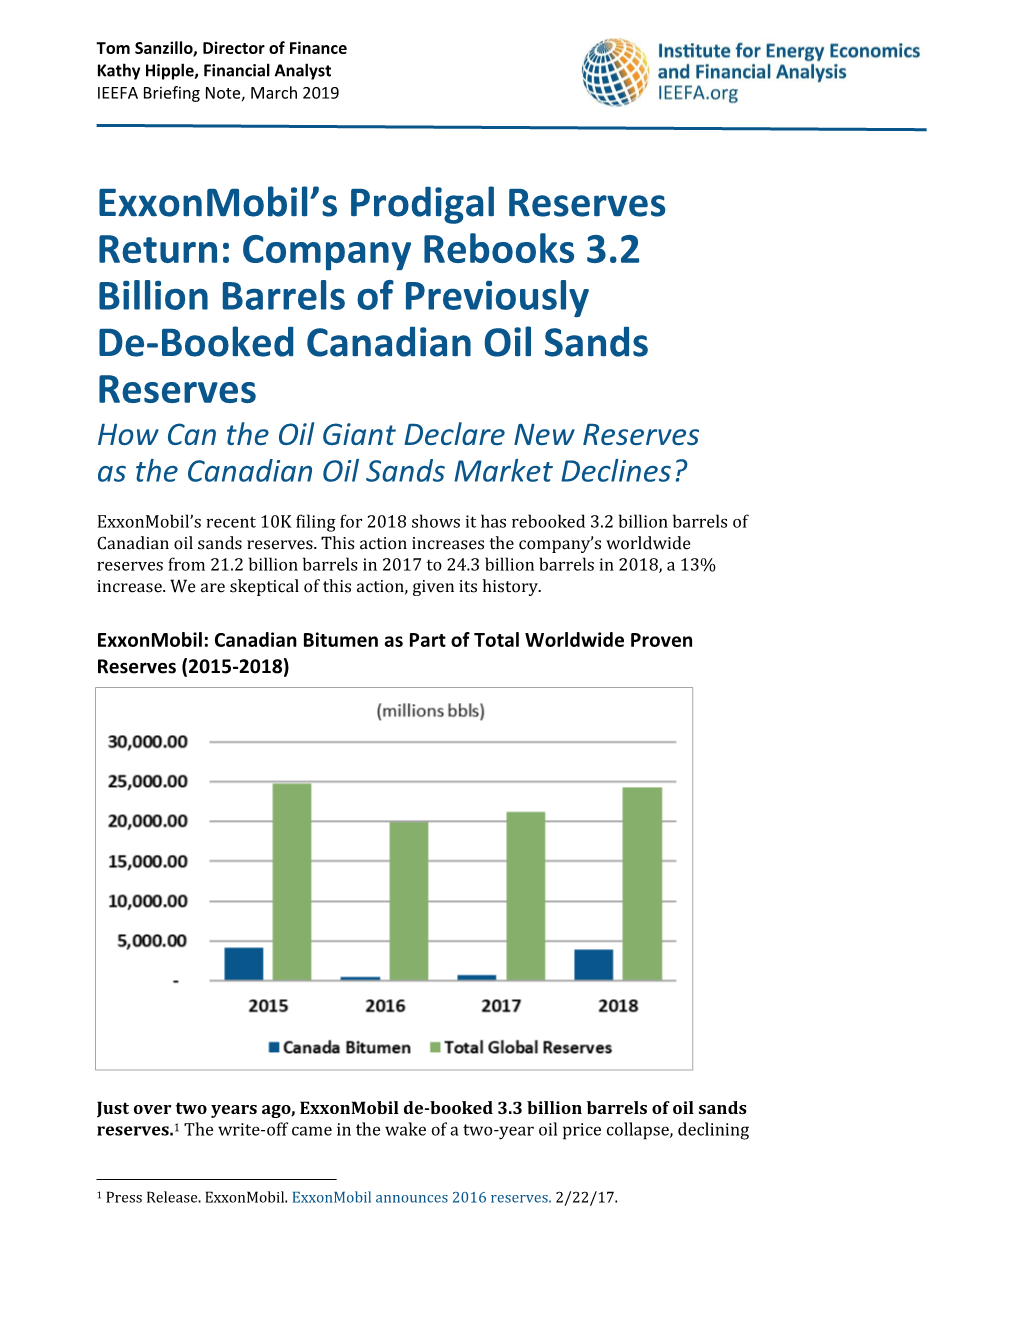 Exxonmobil's Prodigal Reserves Return: Company Rebooks 3.2